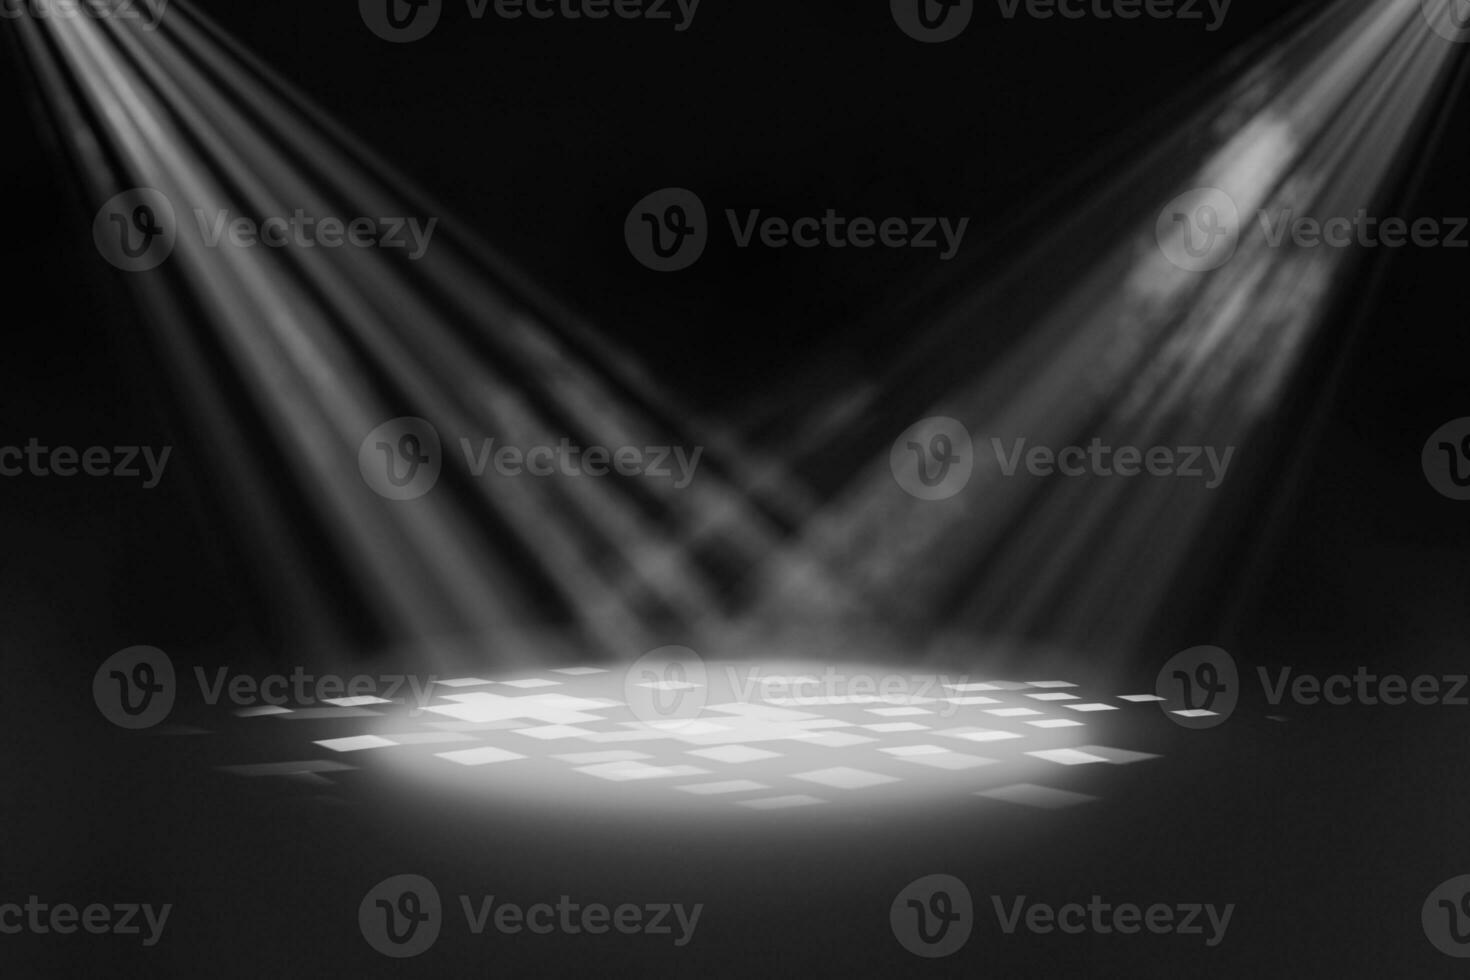 Studio room background with focus spotlights dark gray background with spotlights shining concert stage lighting rendering 3d illustration photo